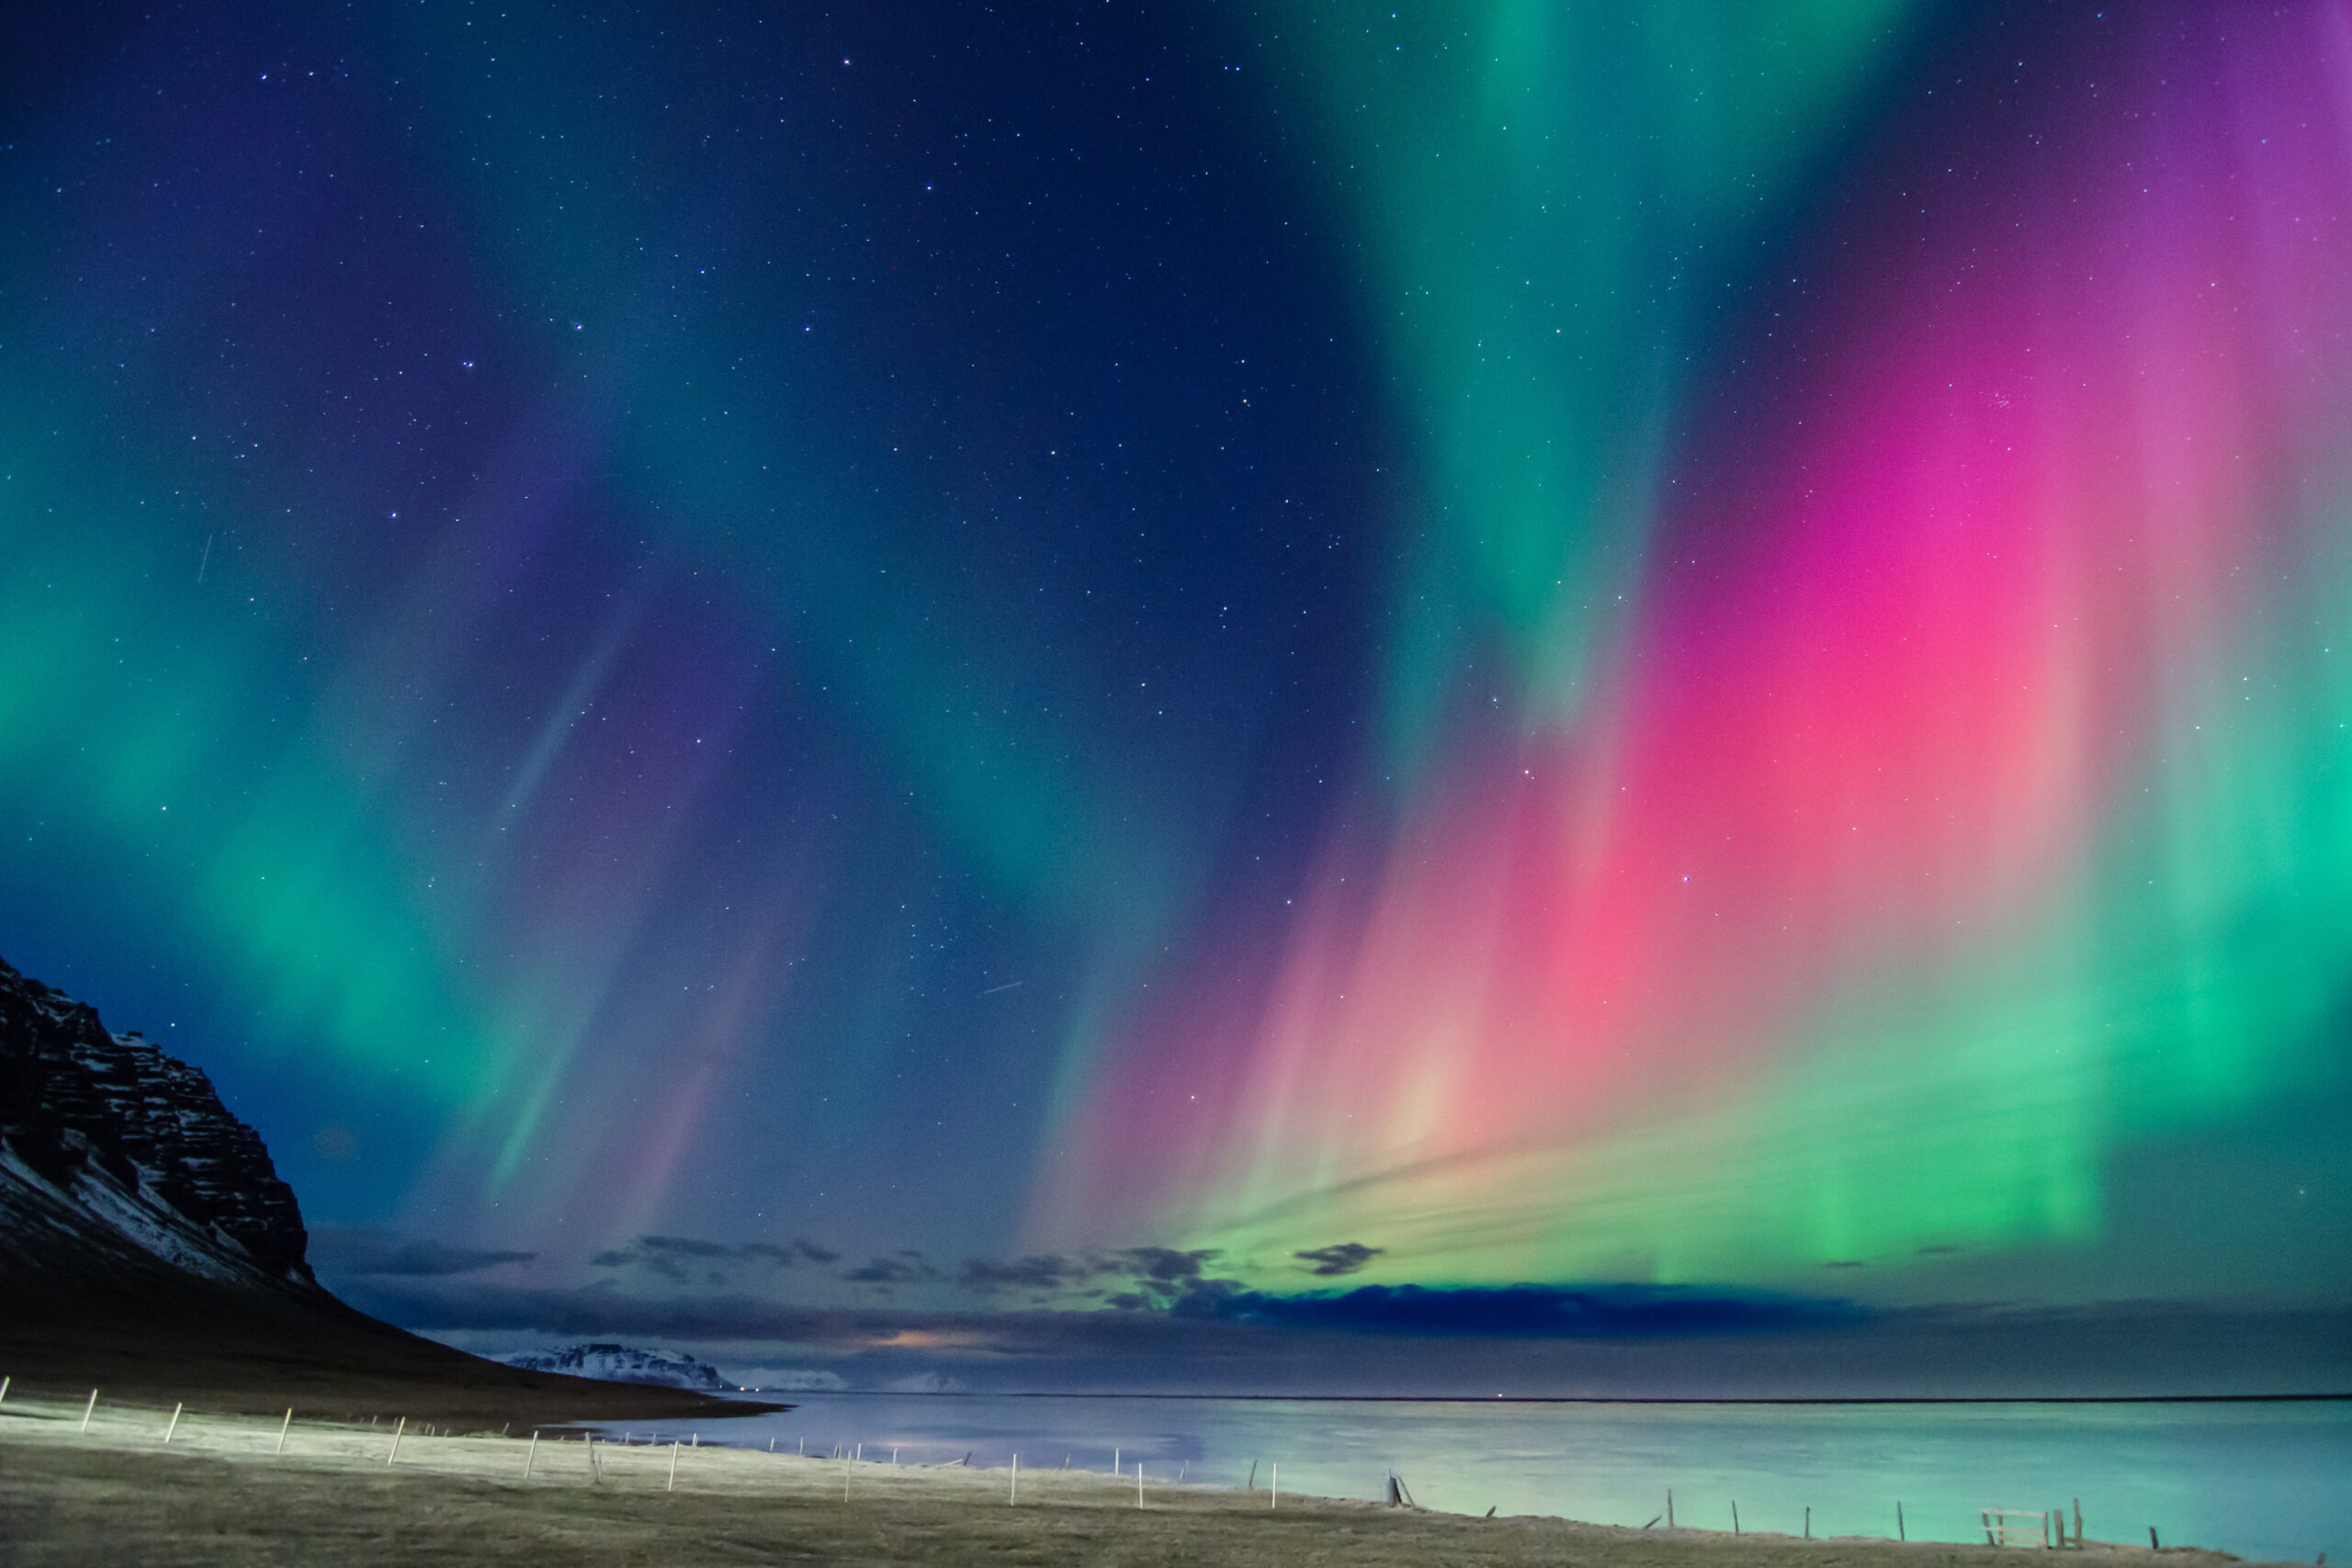 Aurora Borealis will be visible this June again